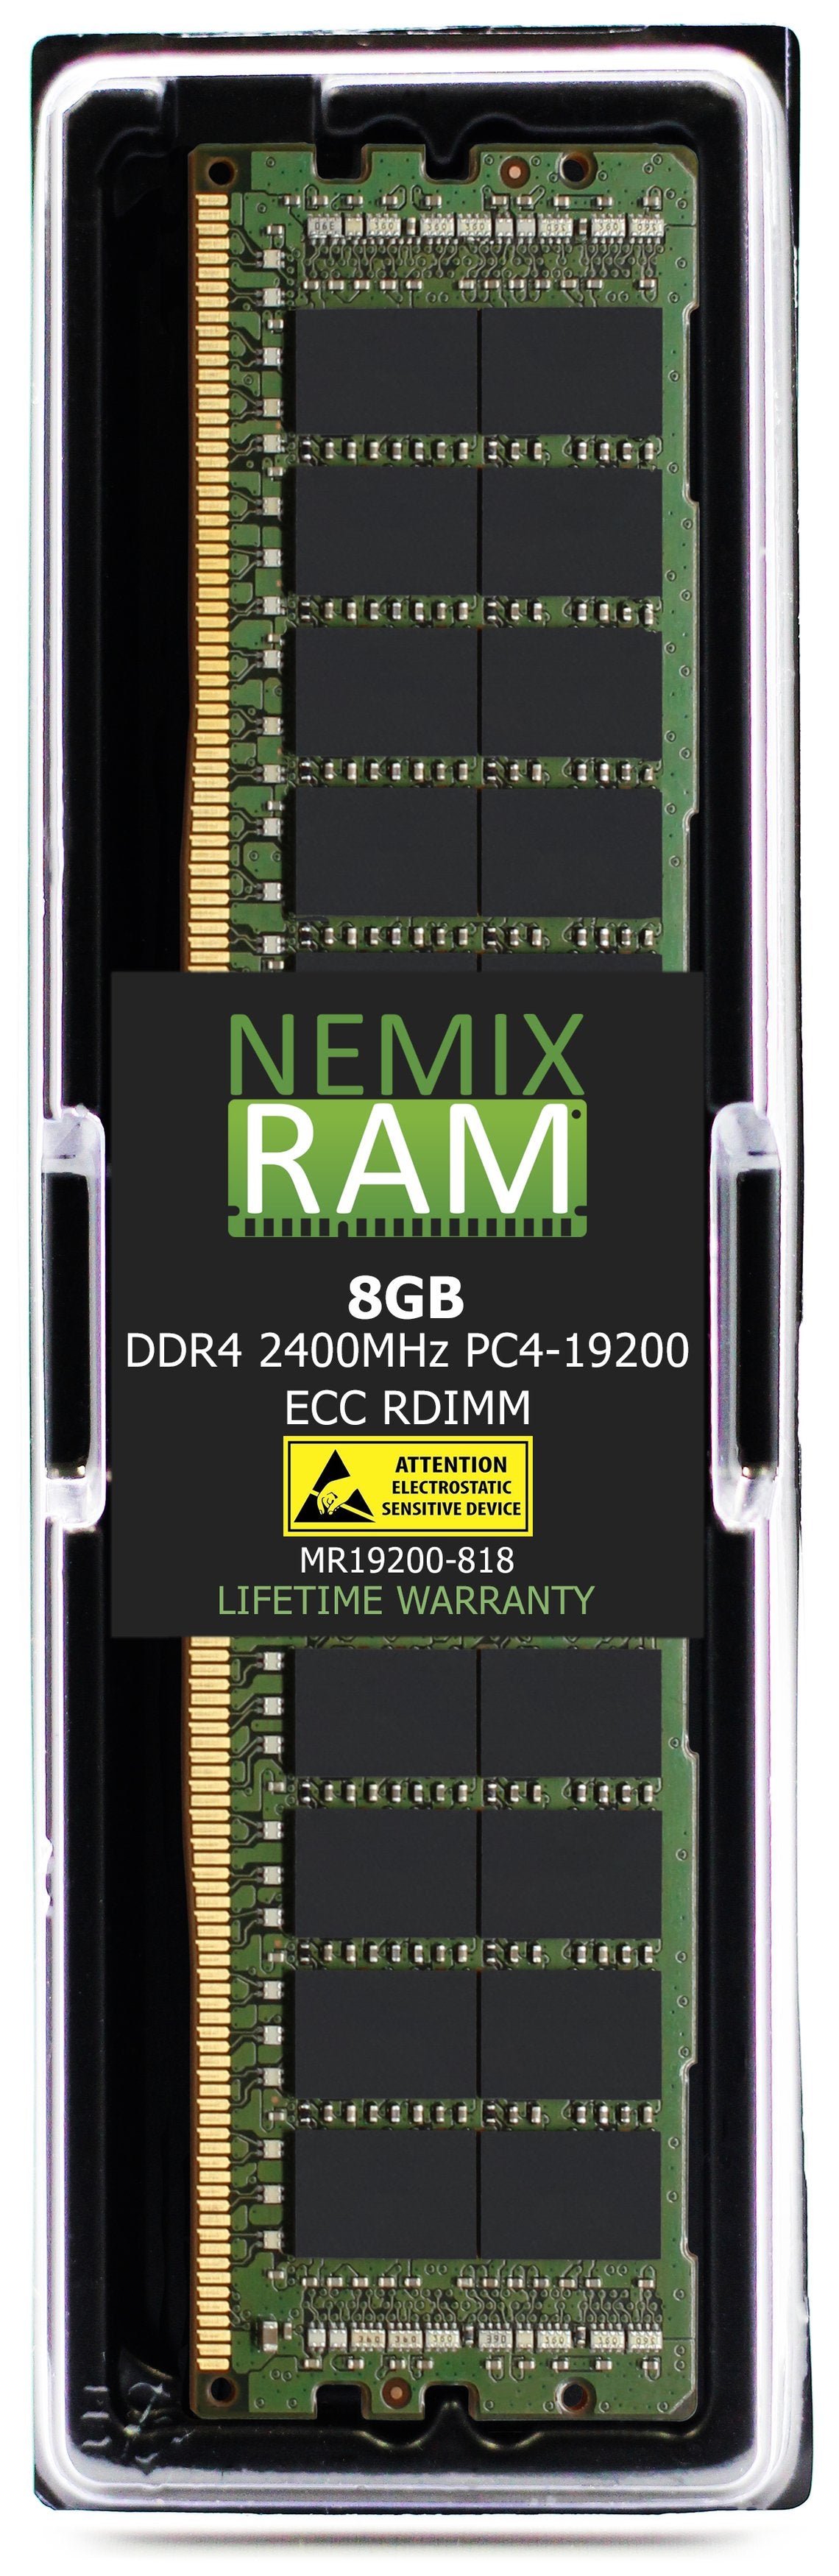 8GB DDR4 2400MHZ PC4-19200 RDIMM Compatible with Supermicro MEM-DR480L-HL03-ER24